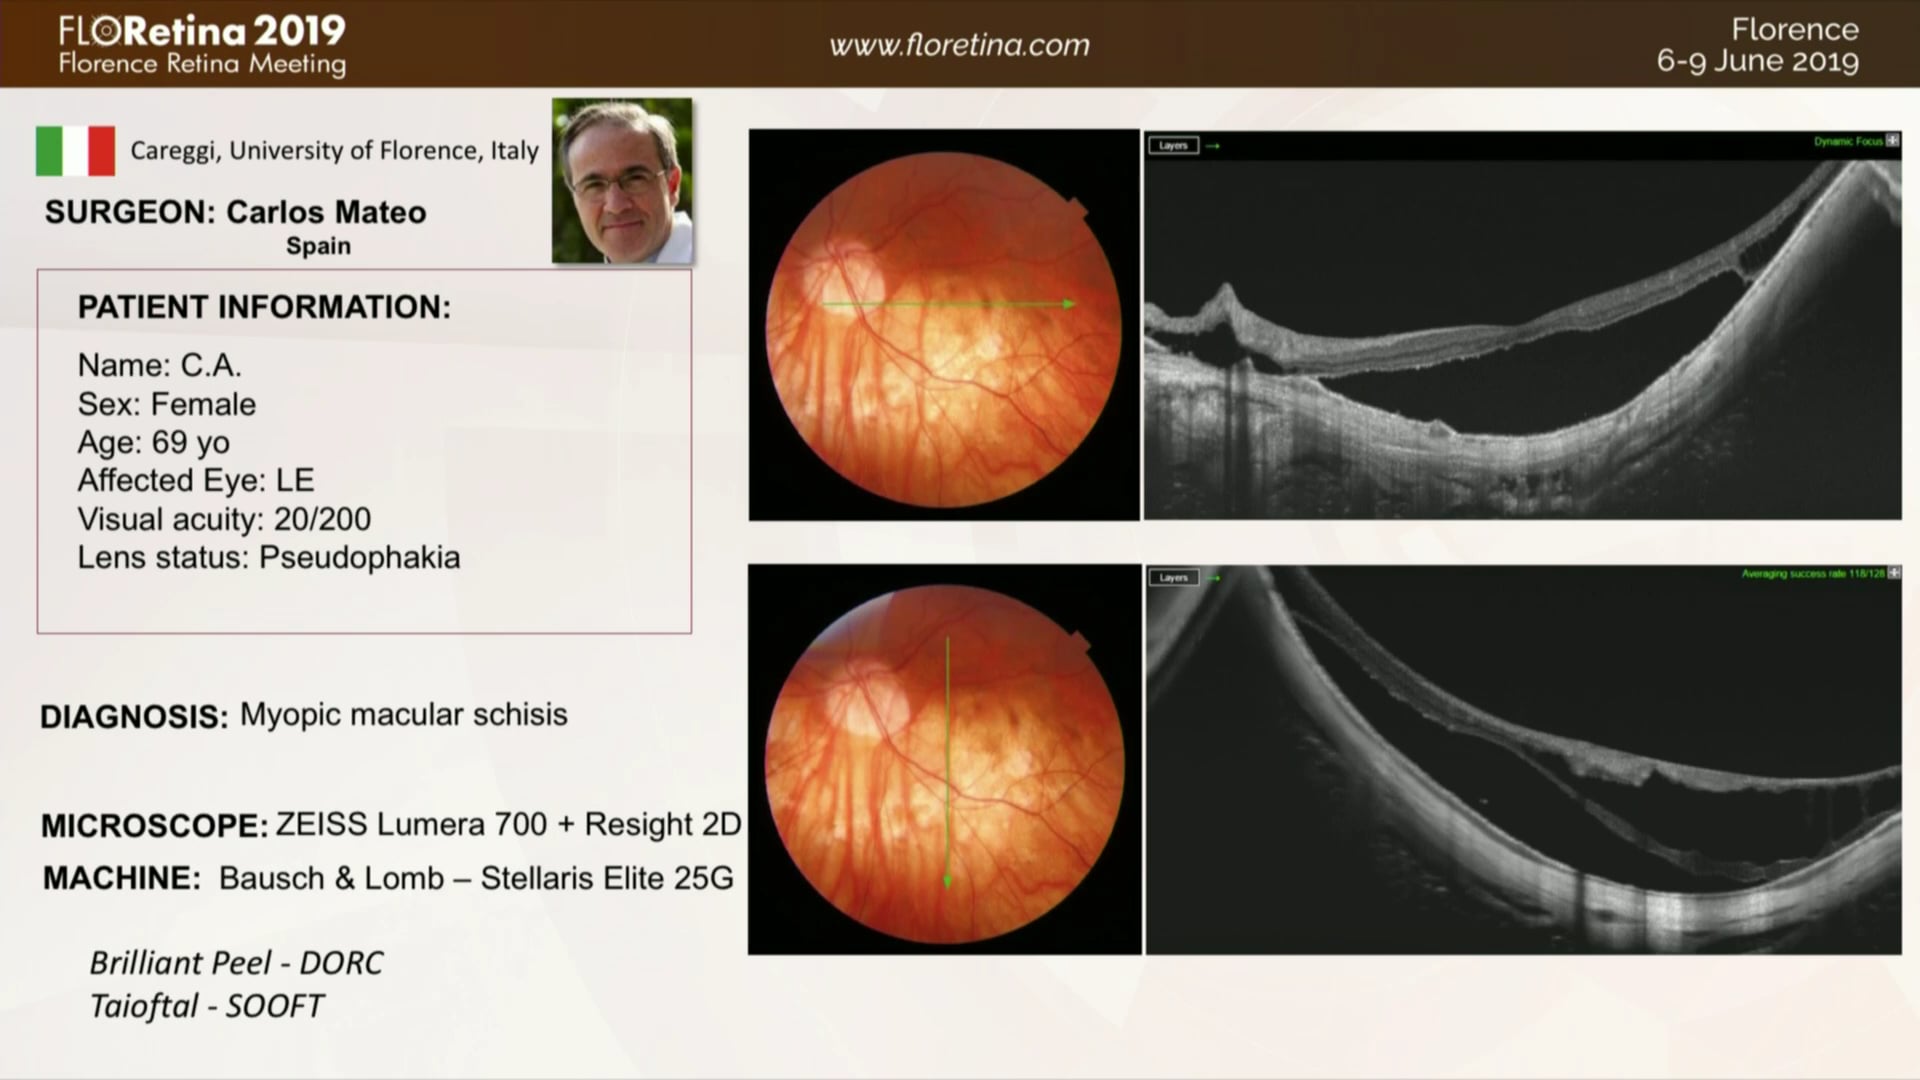 Myopic Macular Schisis and Cataract